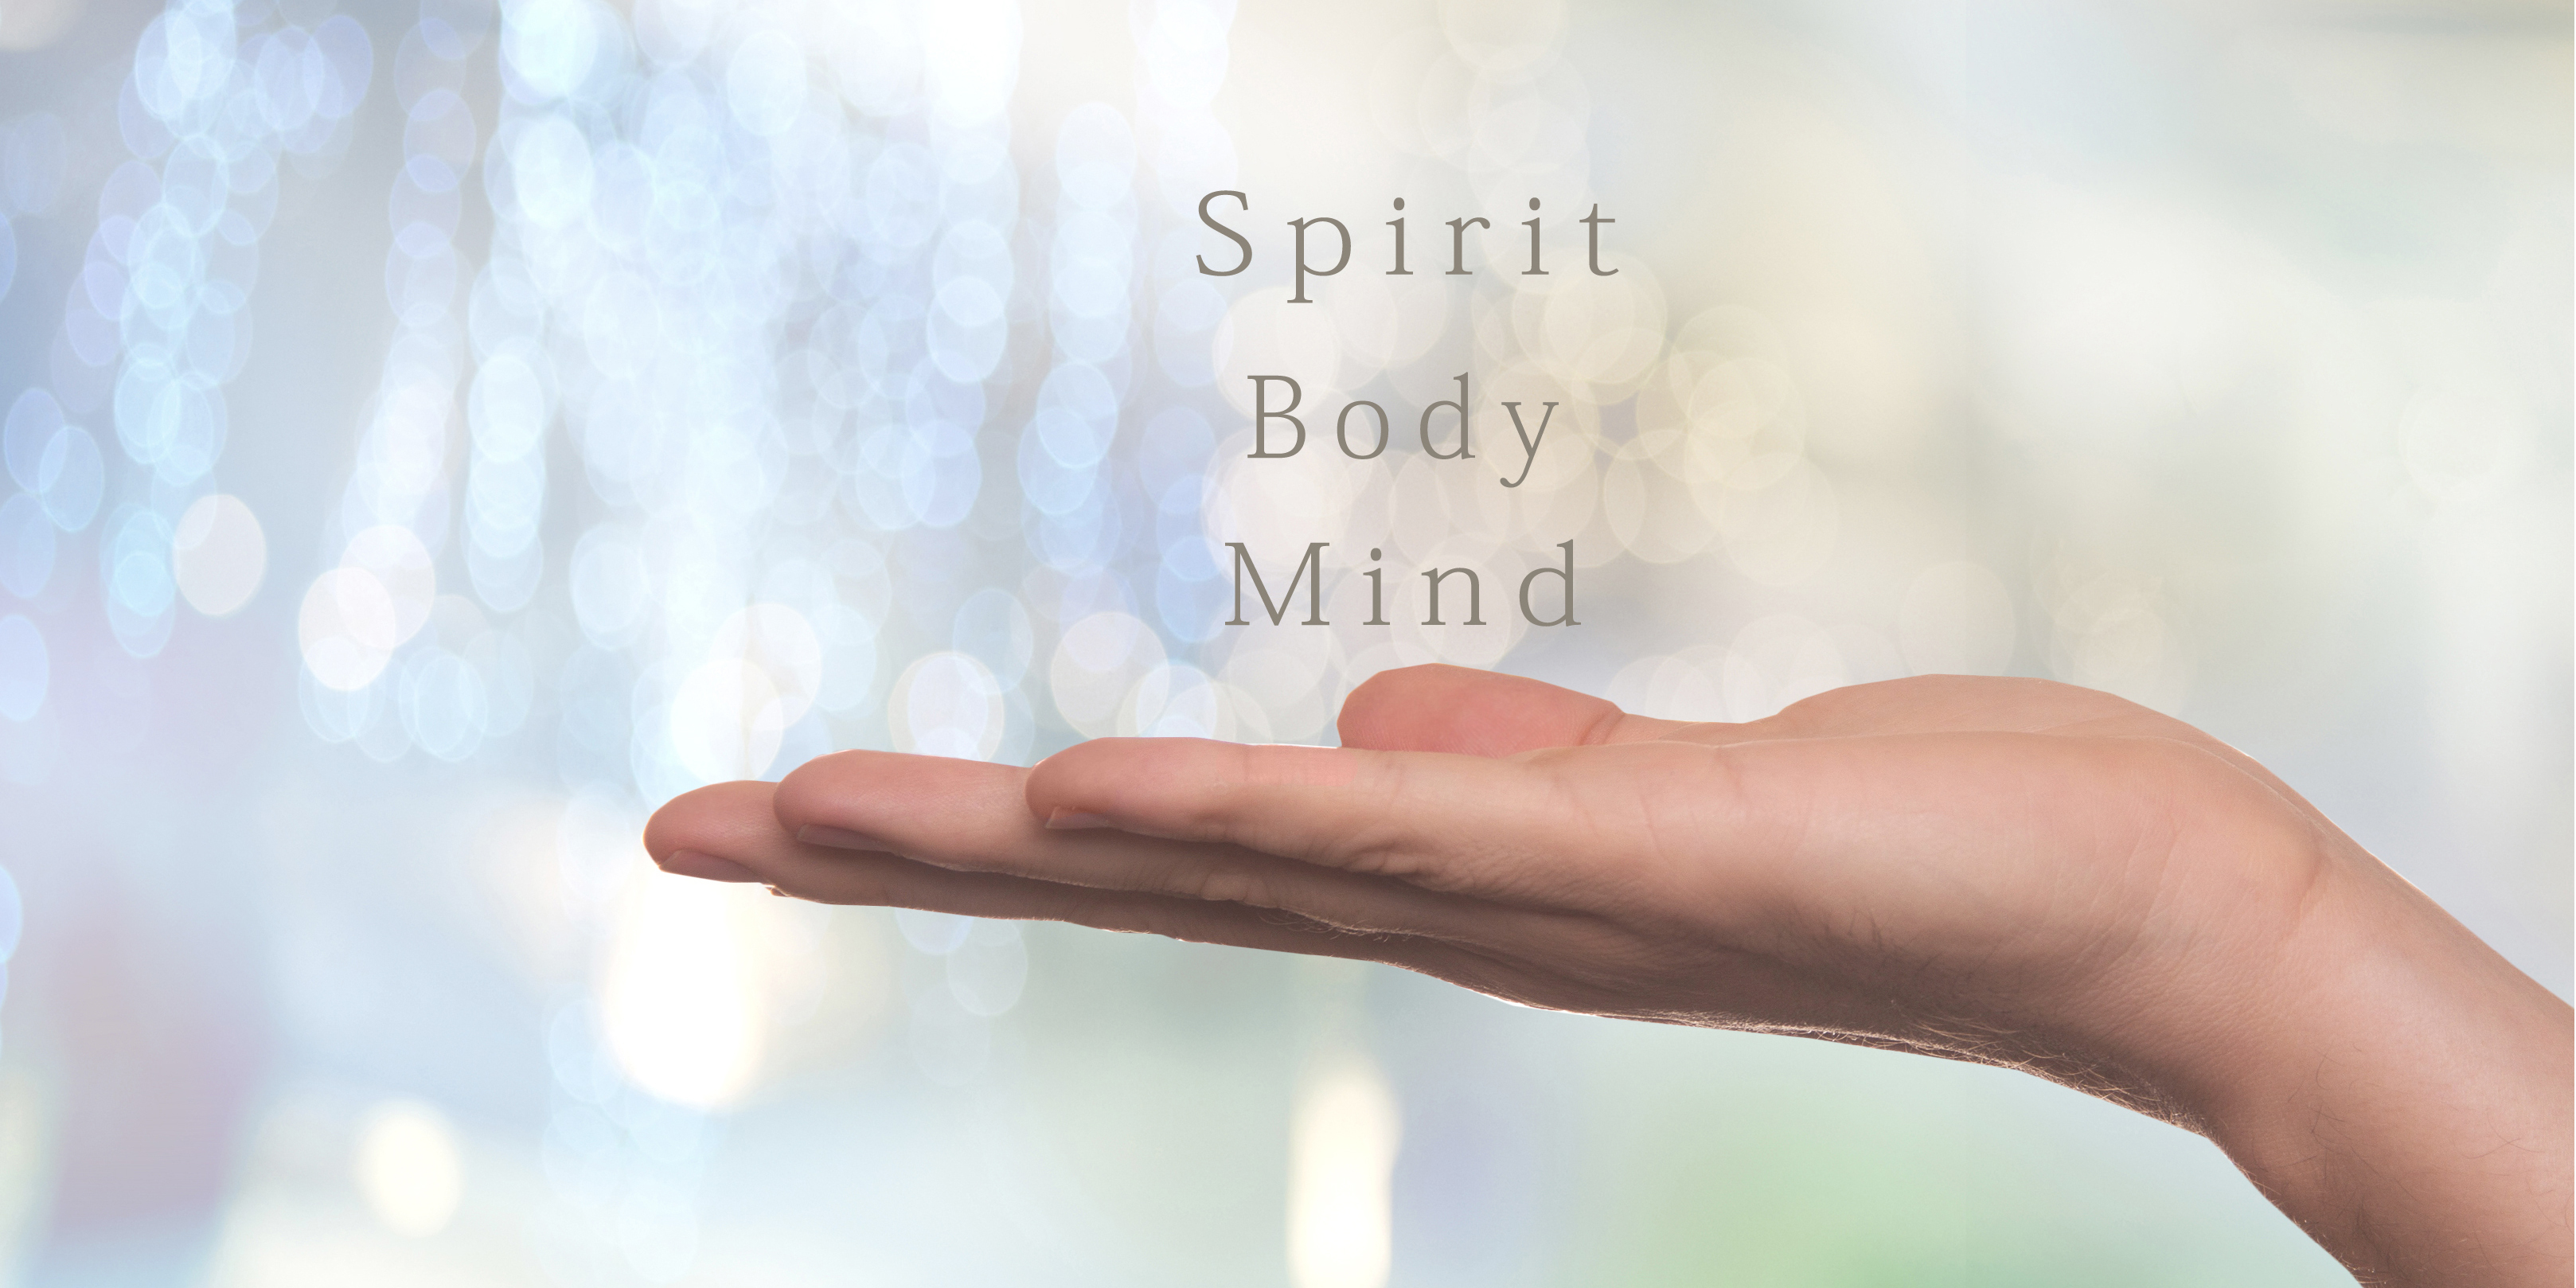 BODY MIND SPIRIT